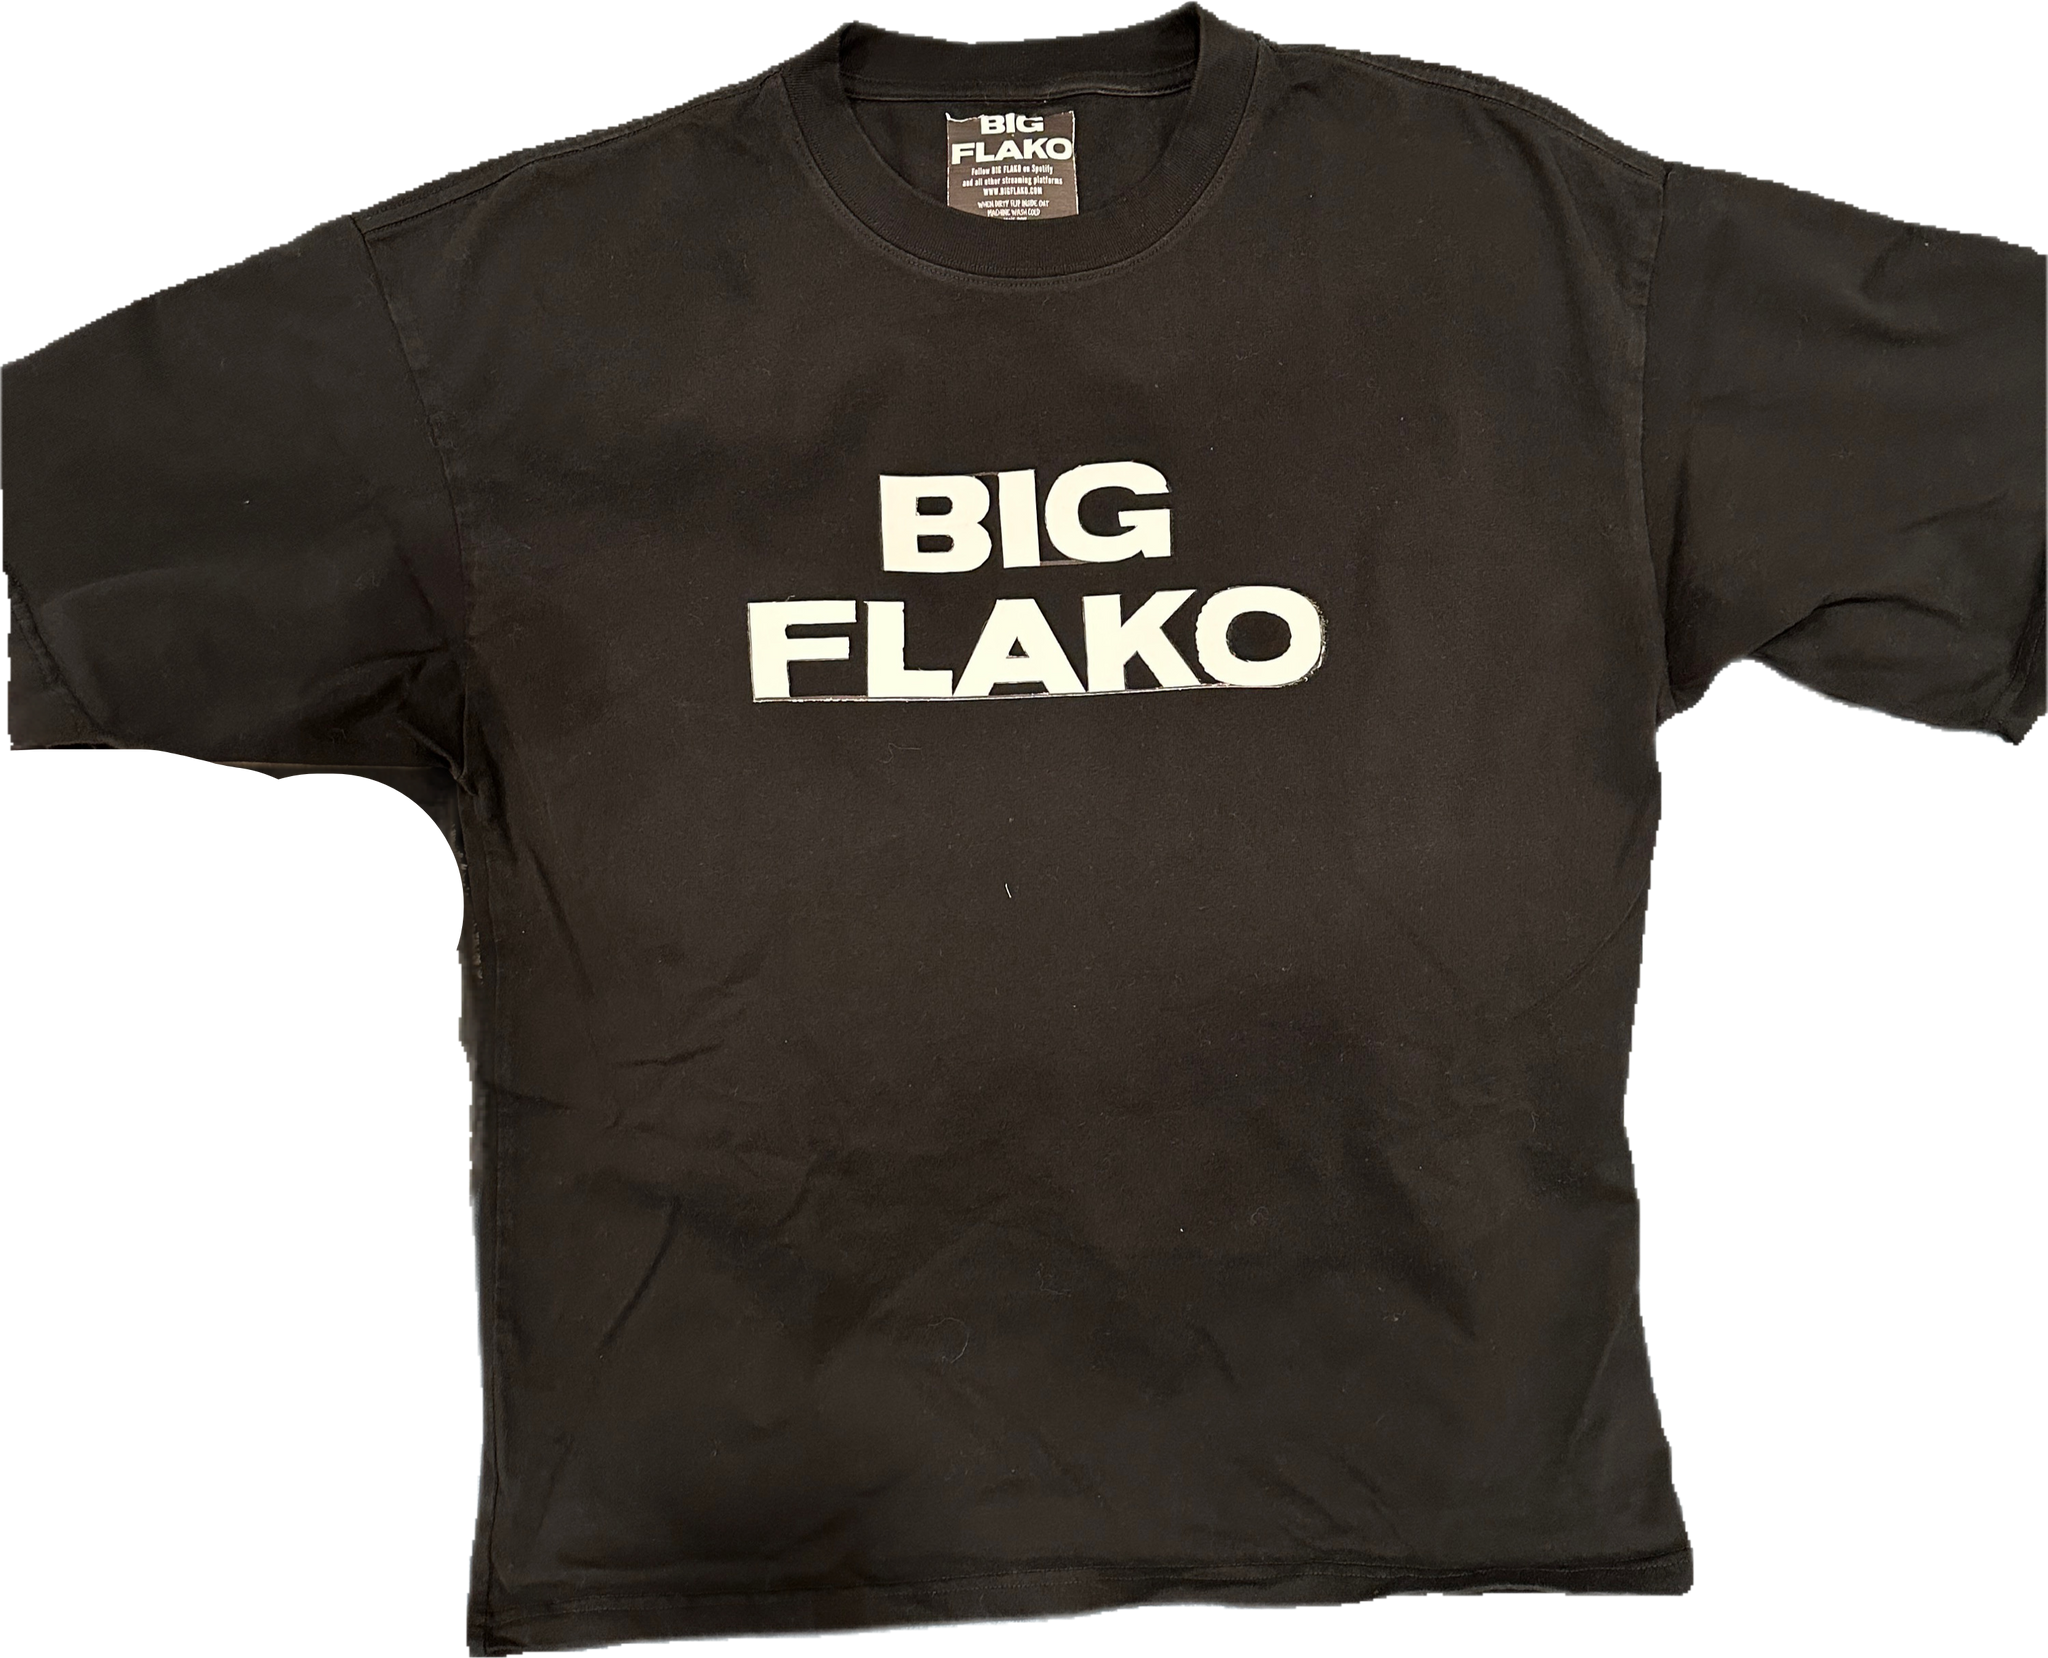 Big Flako Limited Edition T shirt